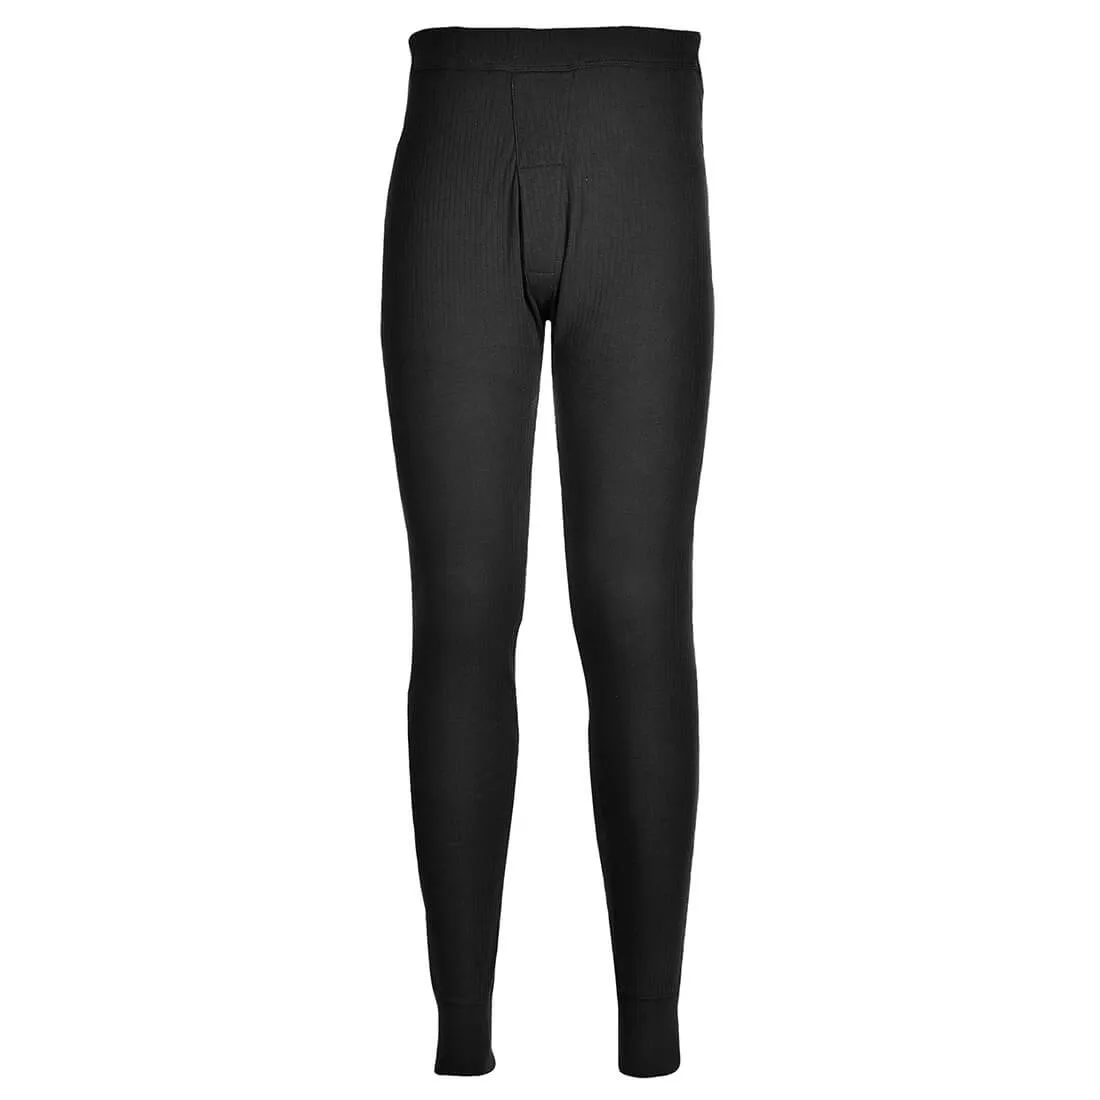 Portwest Thermal Trousers - Black, L